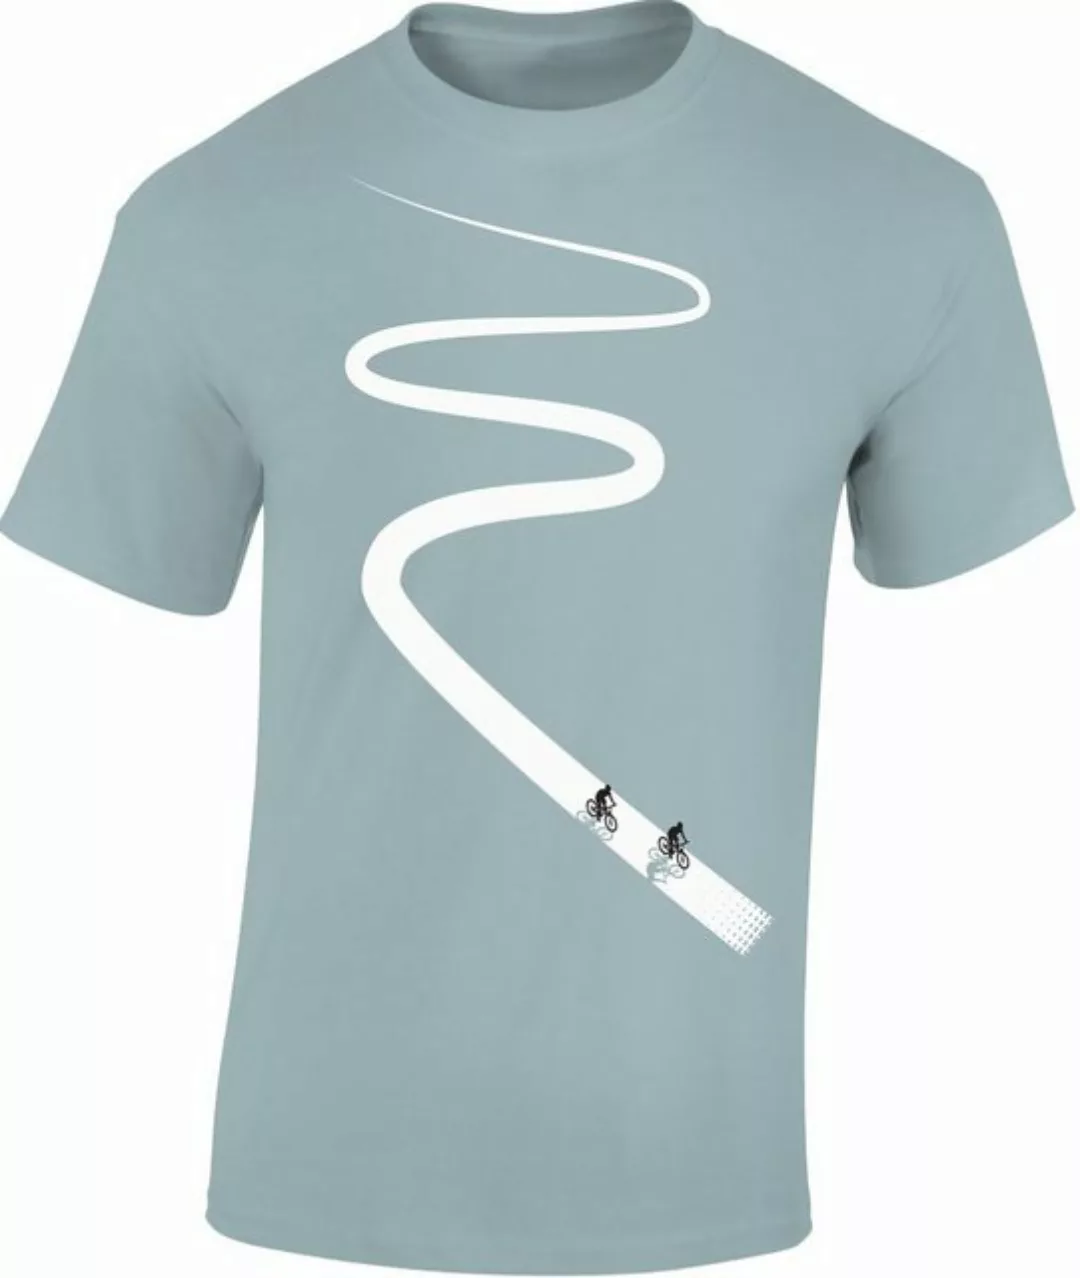 Baddery Print-Shirt Fahrrad T-Shirt : Radweg - Sport Tshirts Herren - Fun S günstig online kaufen